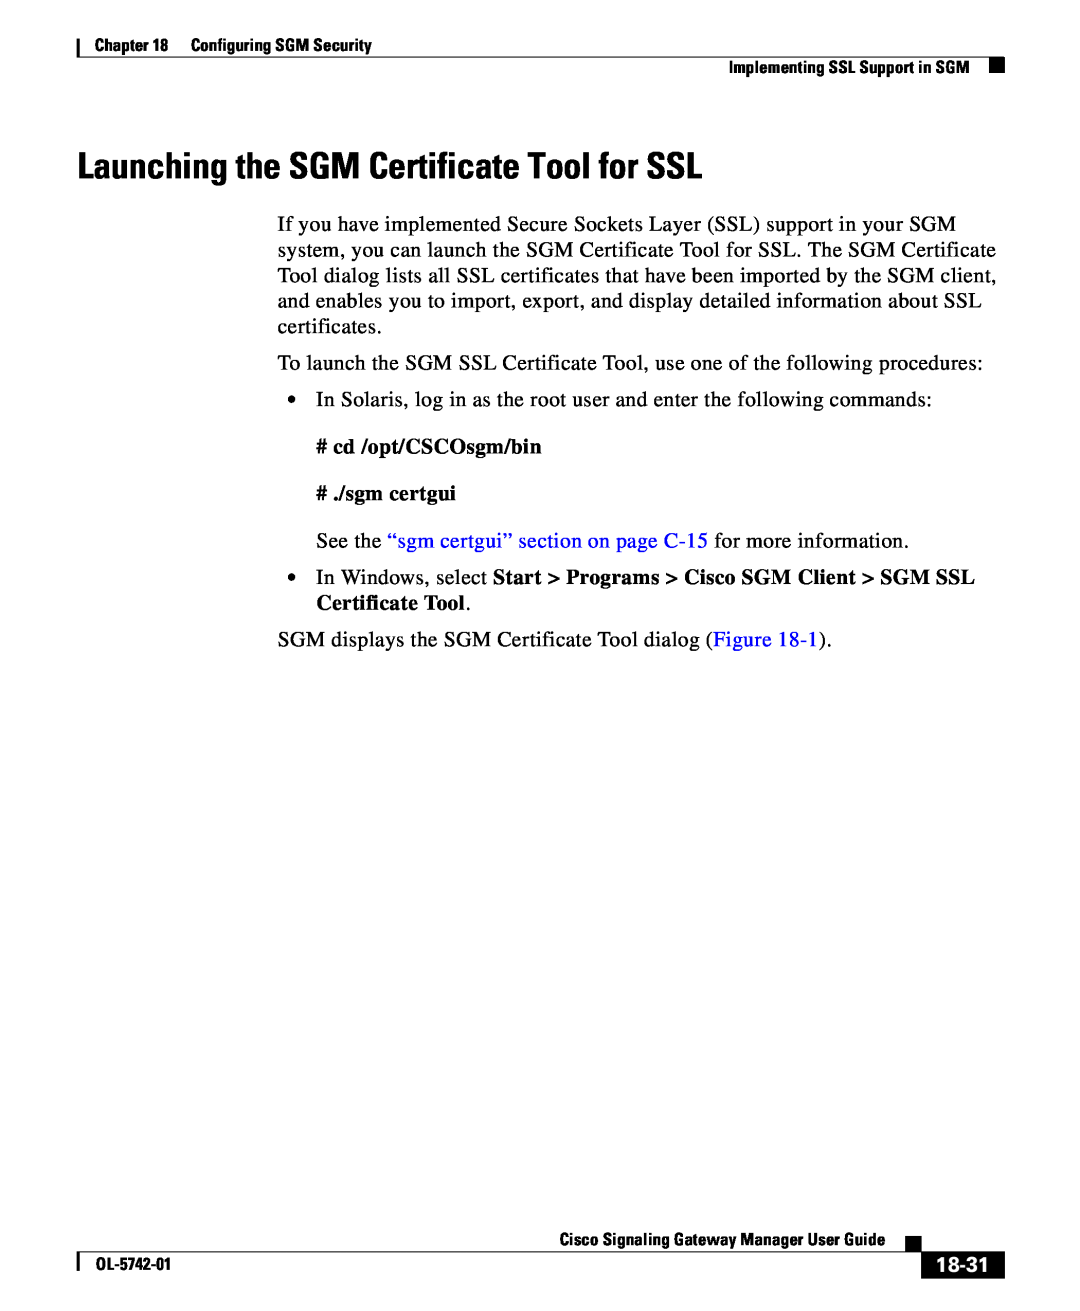 Cisco Systems OL-5742-01 manual Launching the SGM Certificate Tool for SSL, #cd /opt/CSCOsgm/bin #./sgm certgui, 18-31 